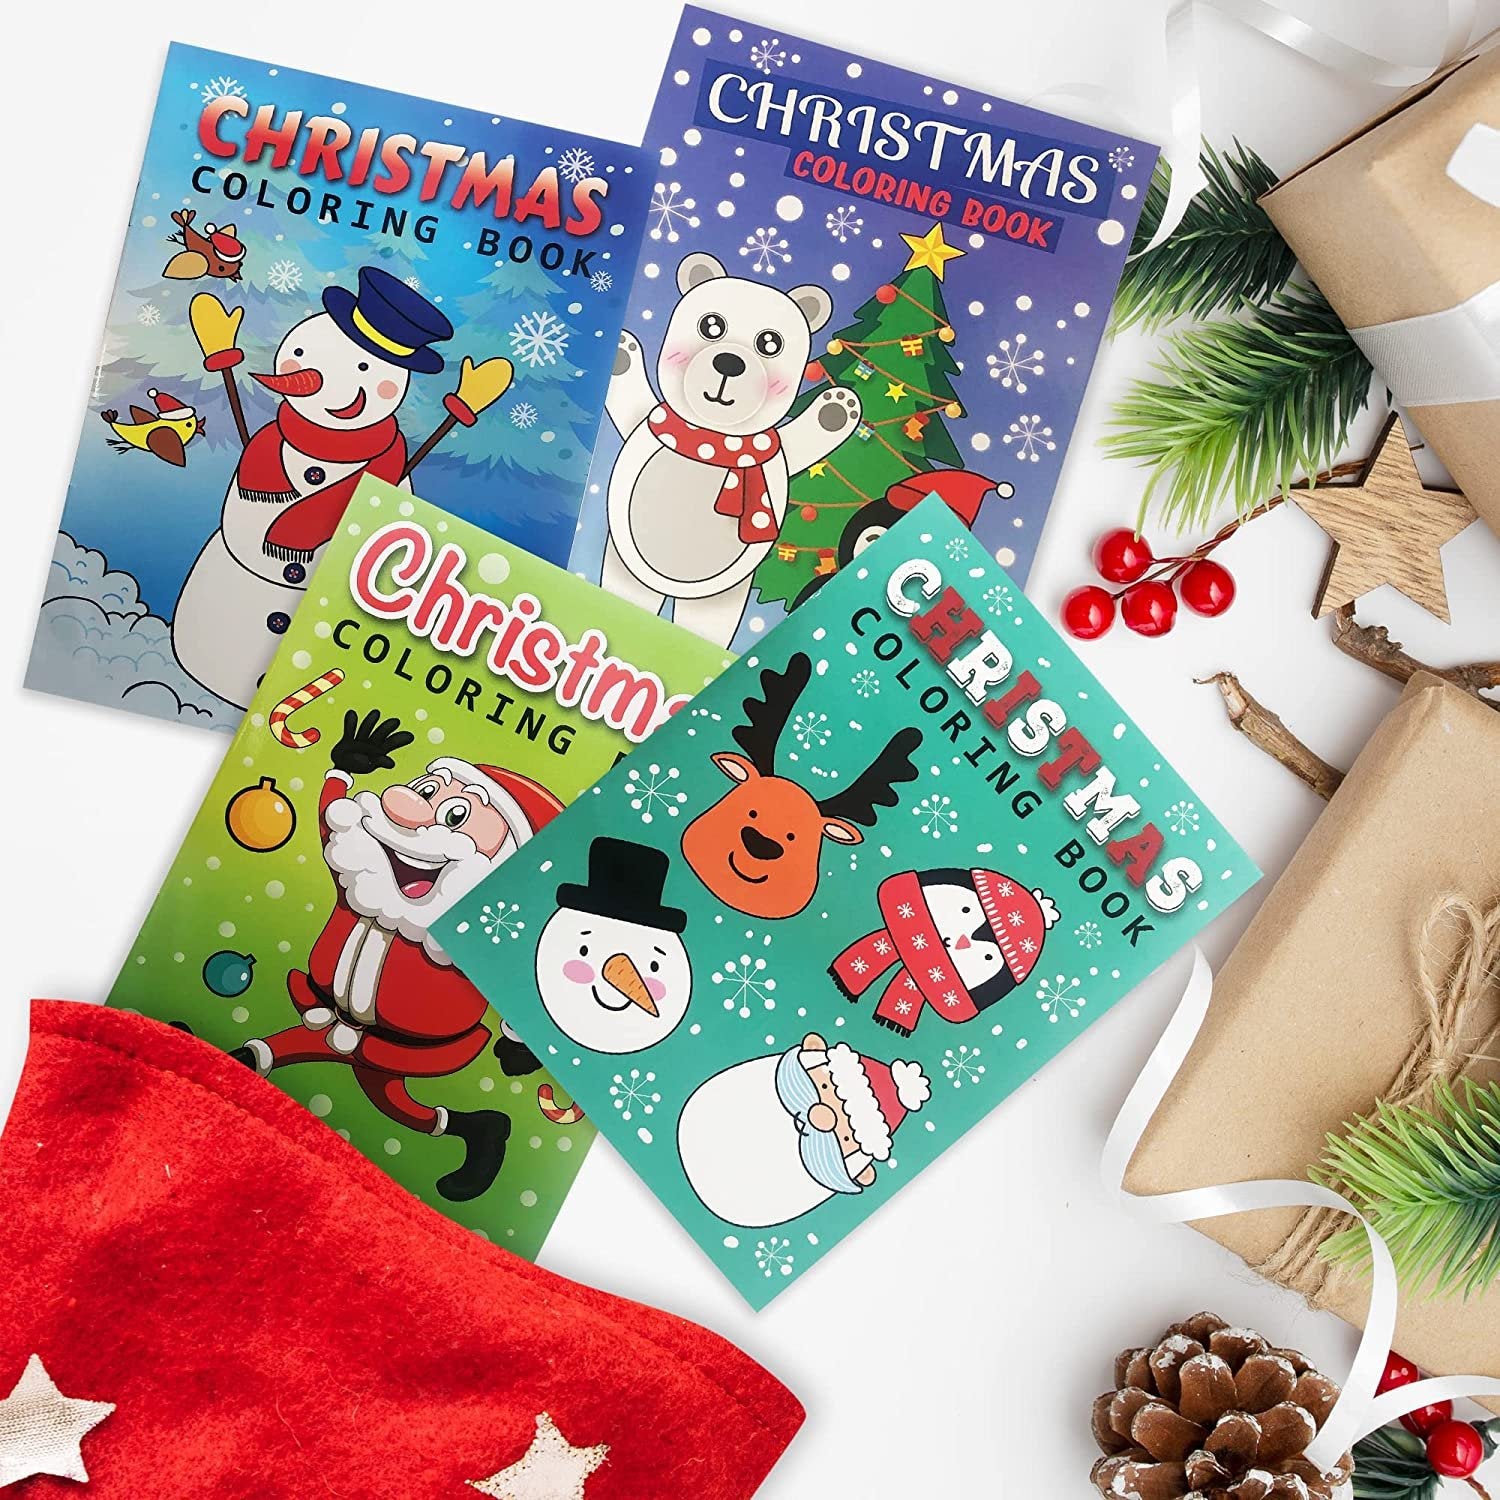 Christmas Coloring Books for Kids Bulk, Pack of 20, 5” x 7” Christmas Coloring Book, Christmas Party Favors For Kids, Favor Bag Fillers, Party Supplies, Christmas Stocking Stuffers